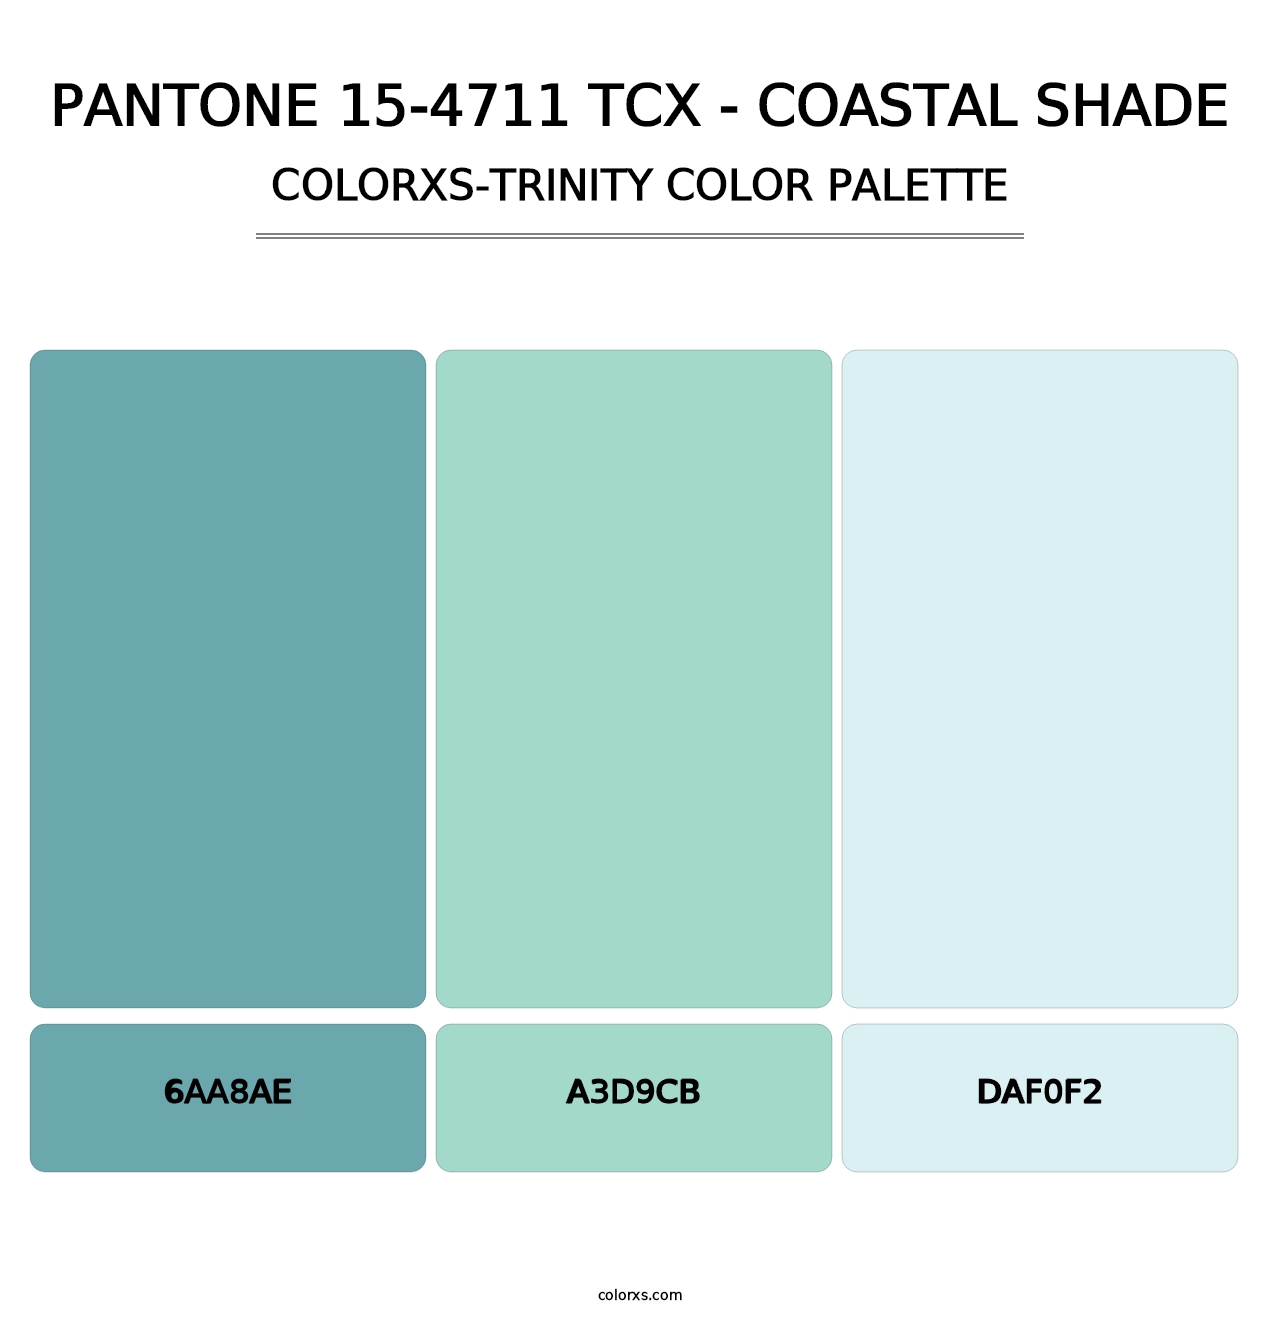 PANTONE 15-4711 TCX - Coastal Shade - Colorxs Trinity Palette